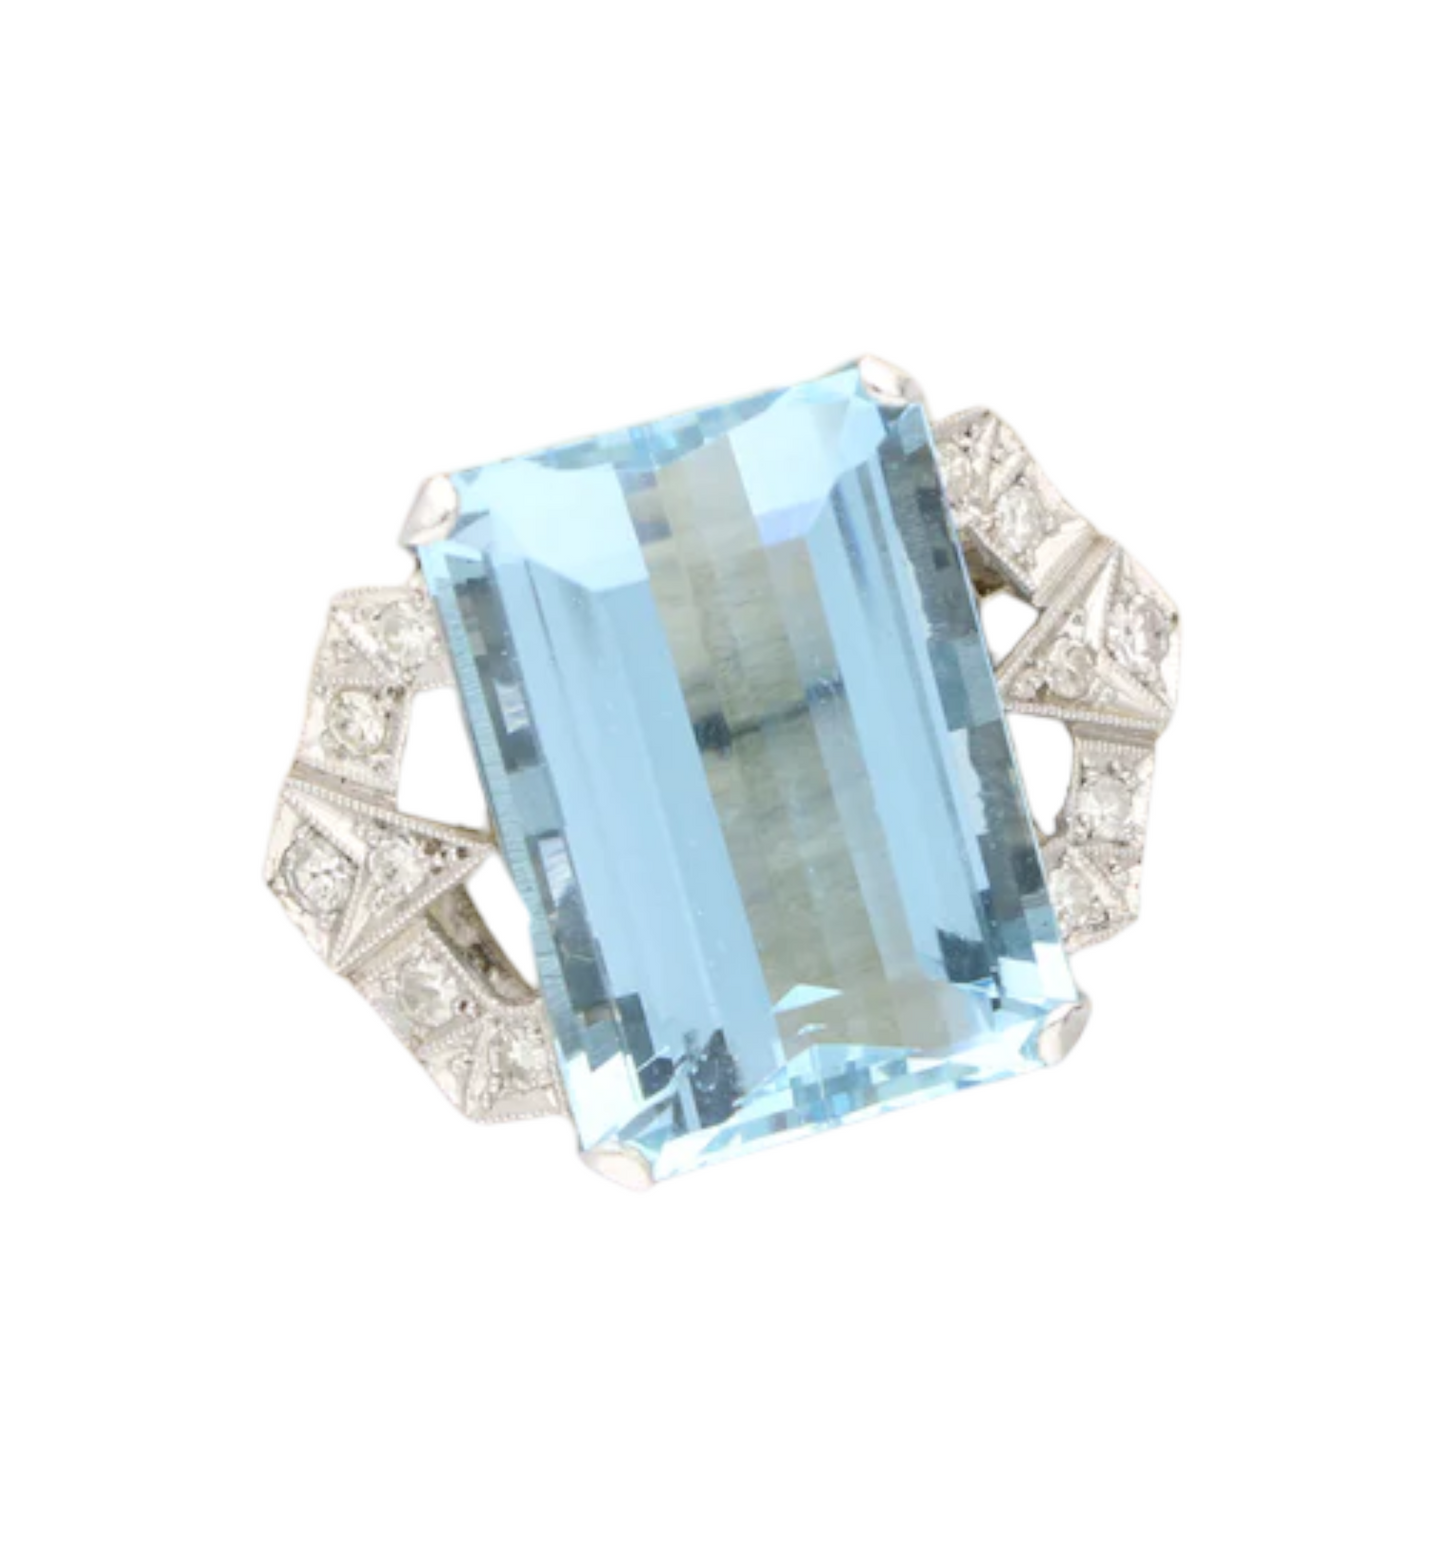 Art Deco style aquamarine and diamond ring